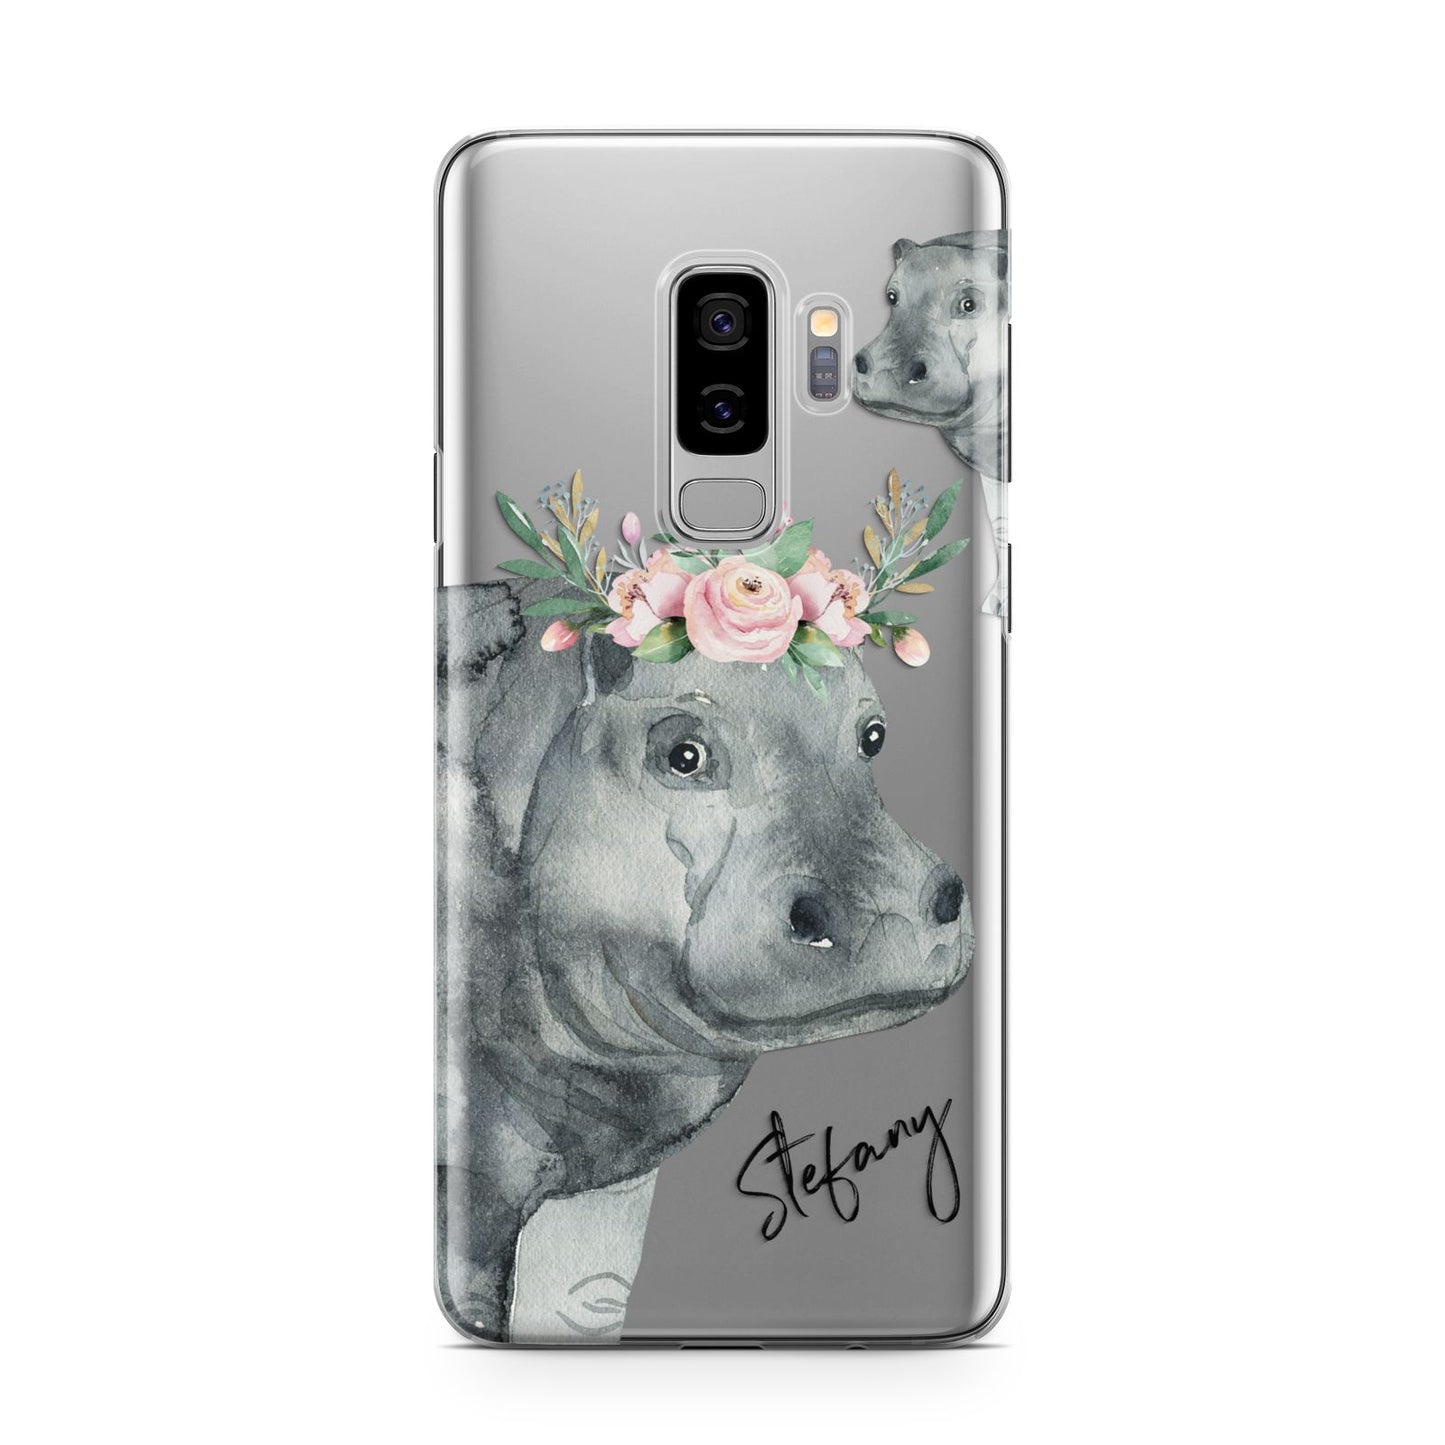 Personalised Hippopotamus Samsung Galaxy S9 Plus Case on Silver phone